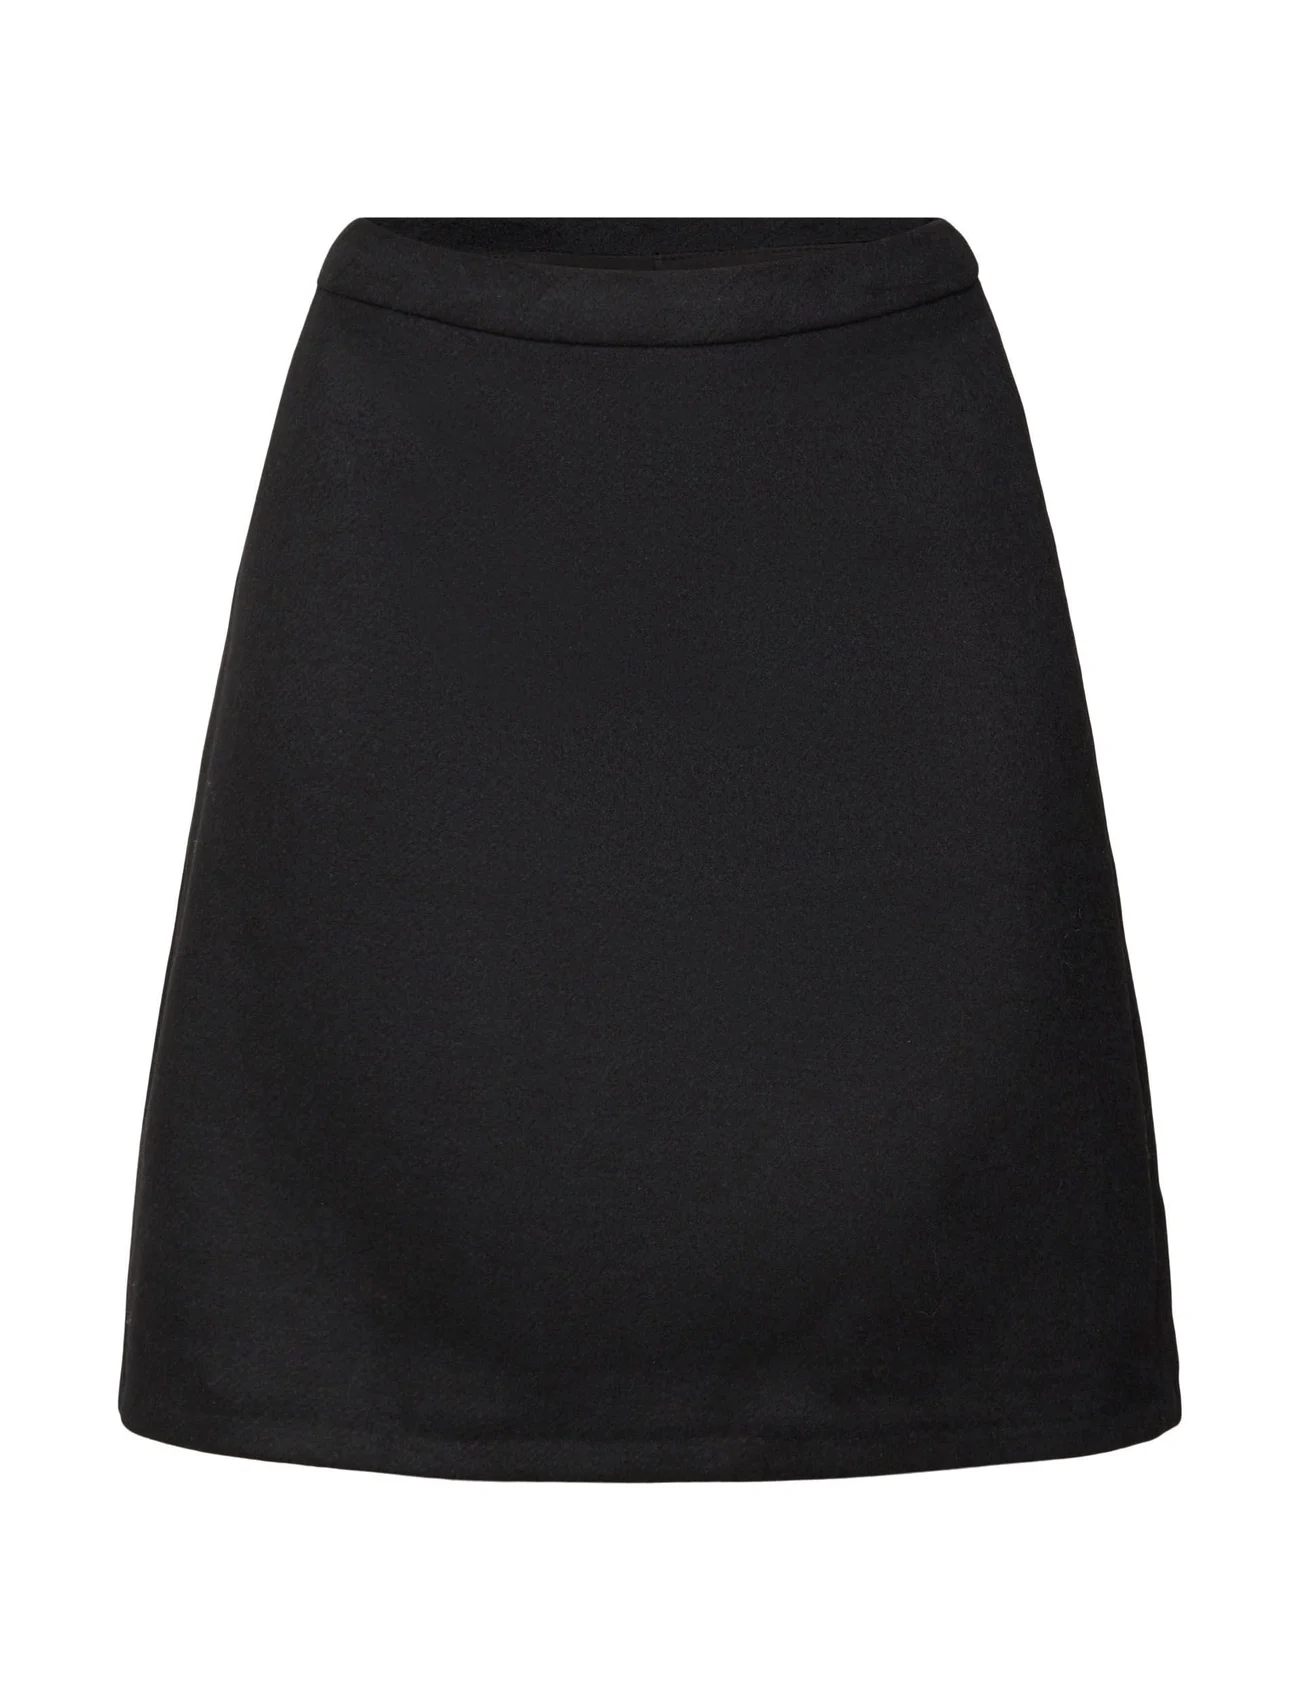 Esprit Collection - Wool blend mini skirt - korte rokken - black - 0